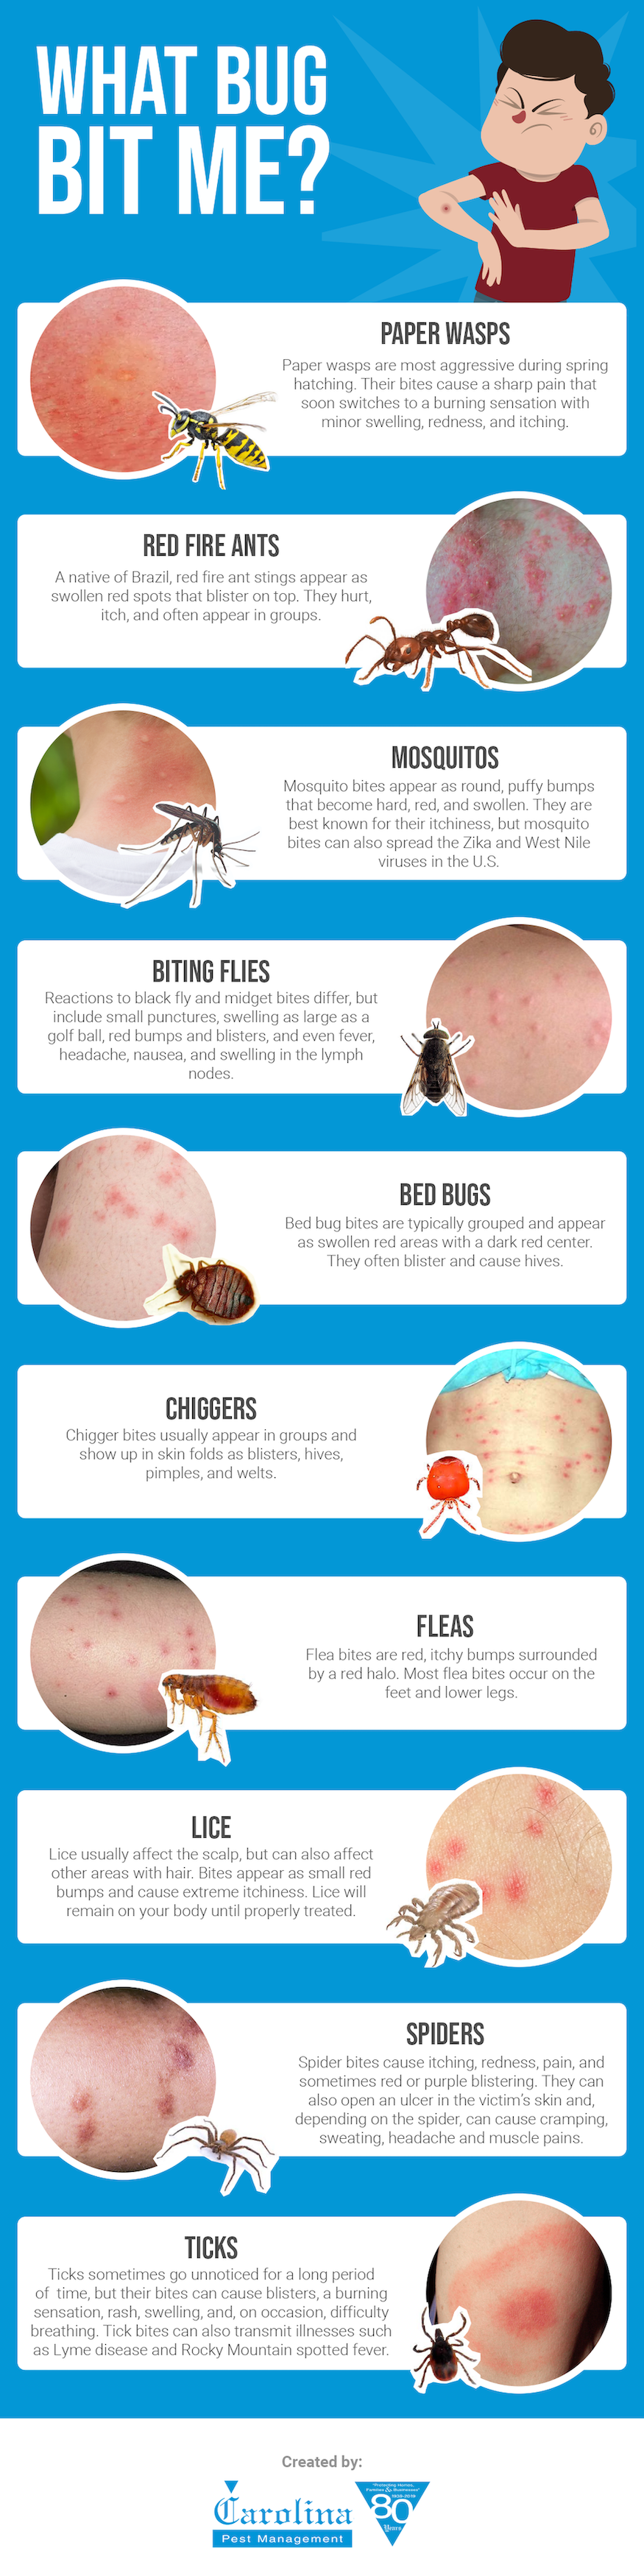 Carolina Pest | What Bug Bit Me? Identify & Treat Bug Bites | Carolina Pest